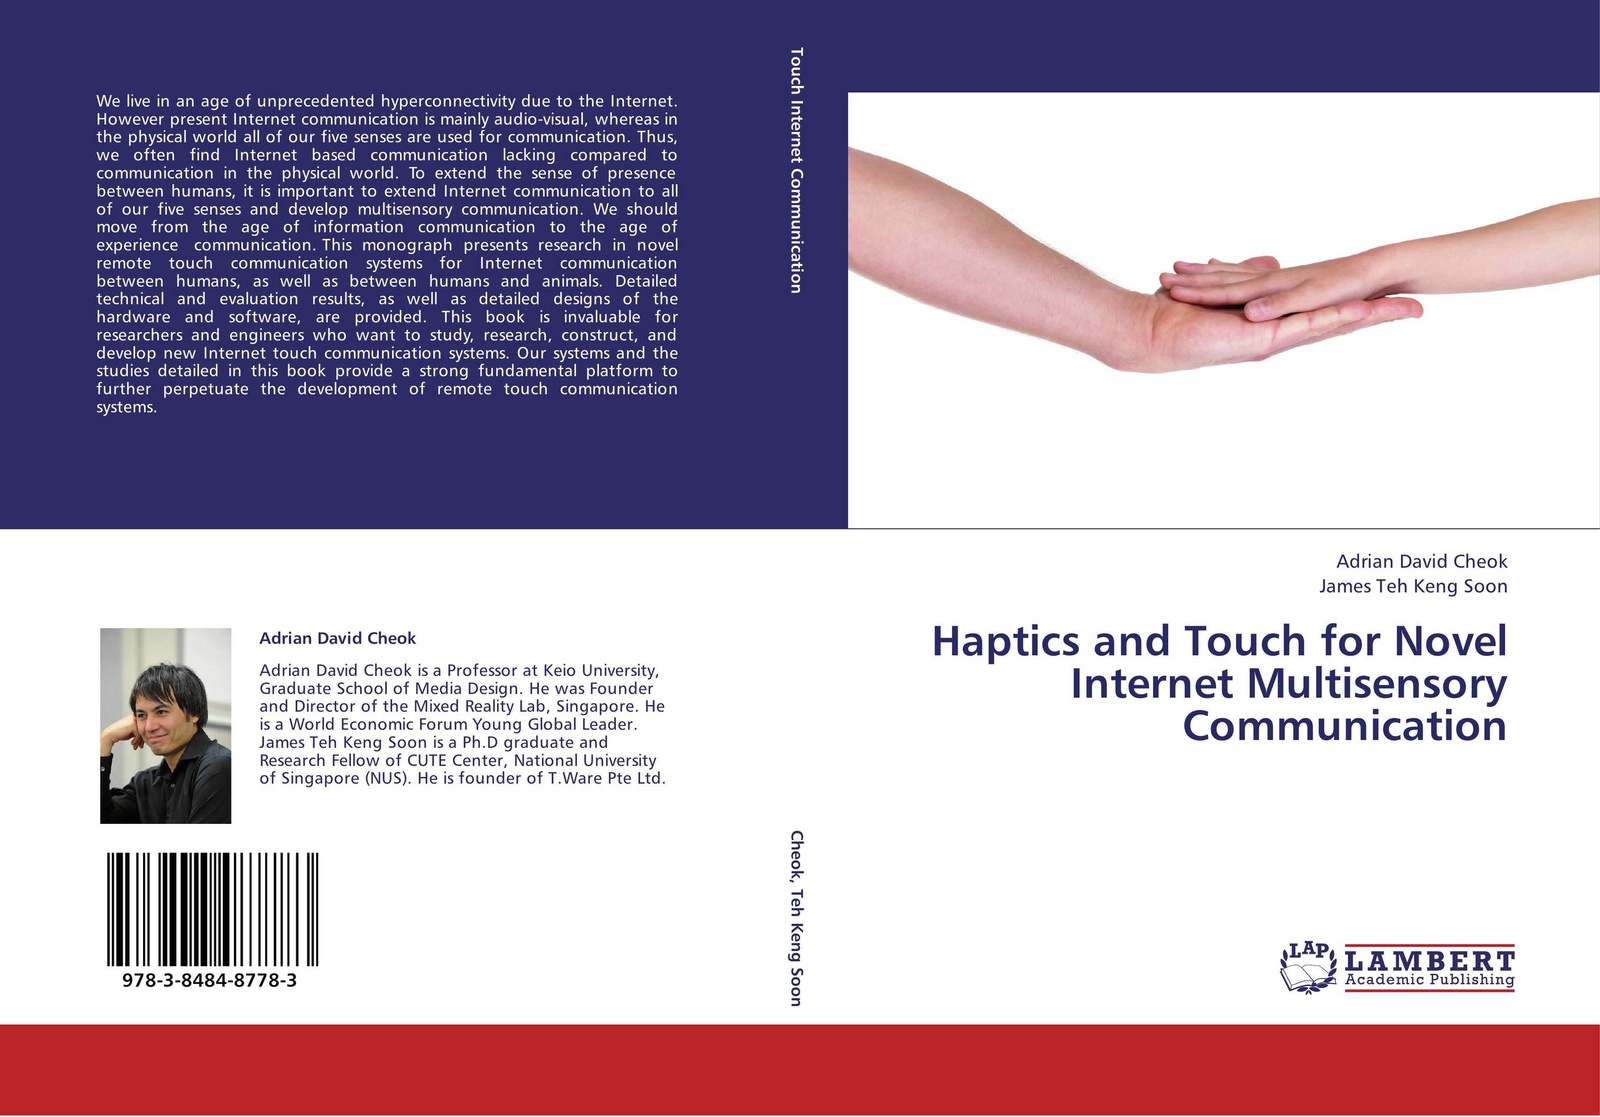 Фанфики по fundamental paper education. Adrian Cheok. Haptics. Touch communication. Haptics in non-verbal communication.